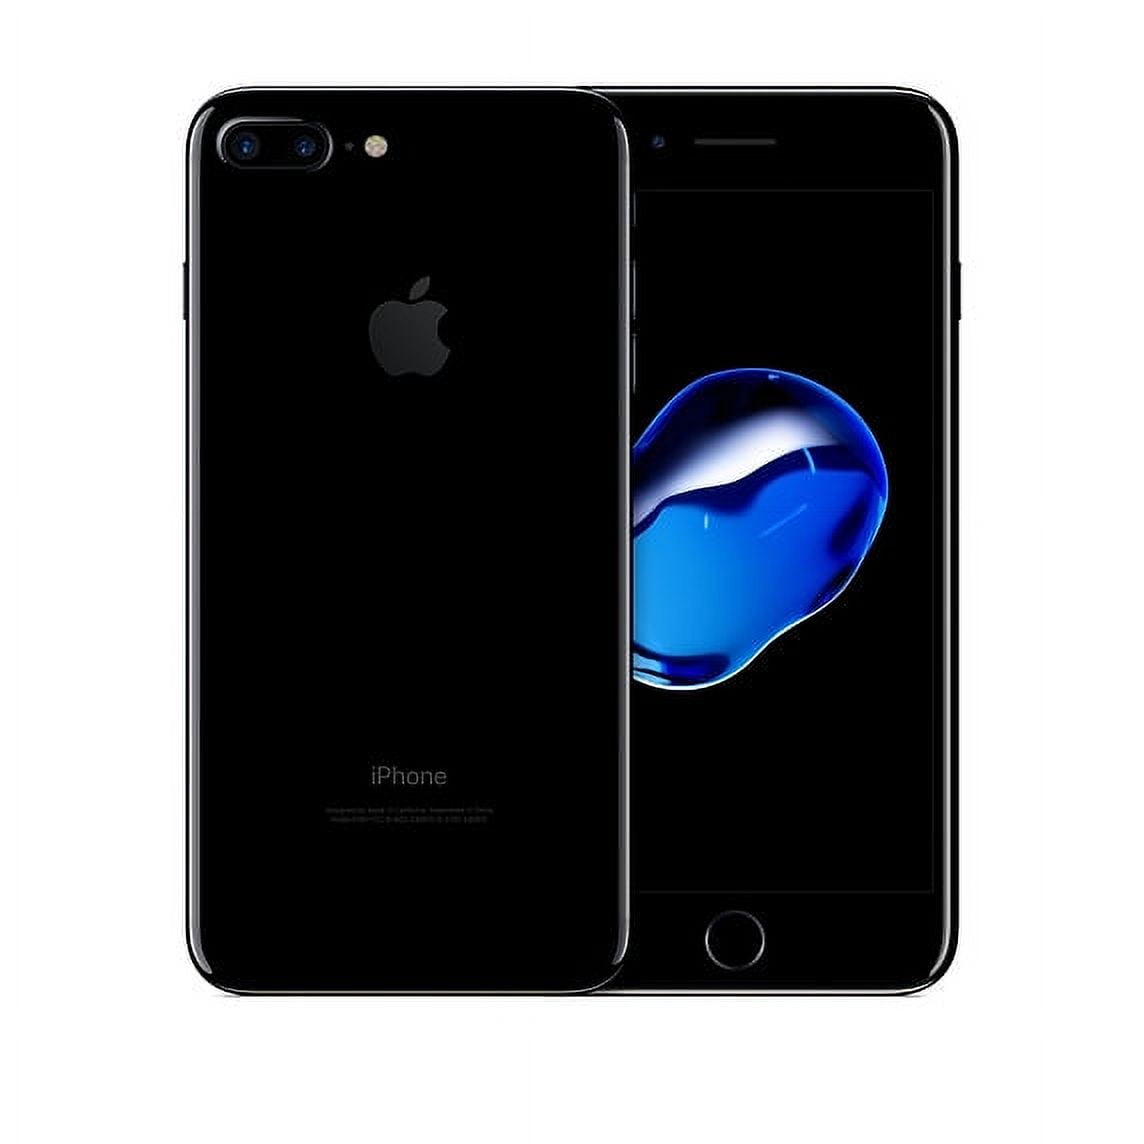 Comprar iPhone 7 en Guatemala